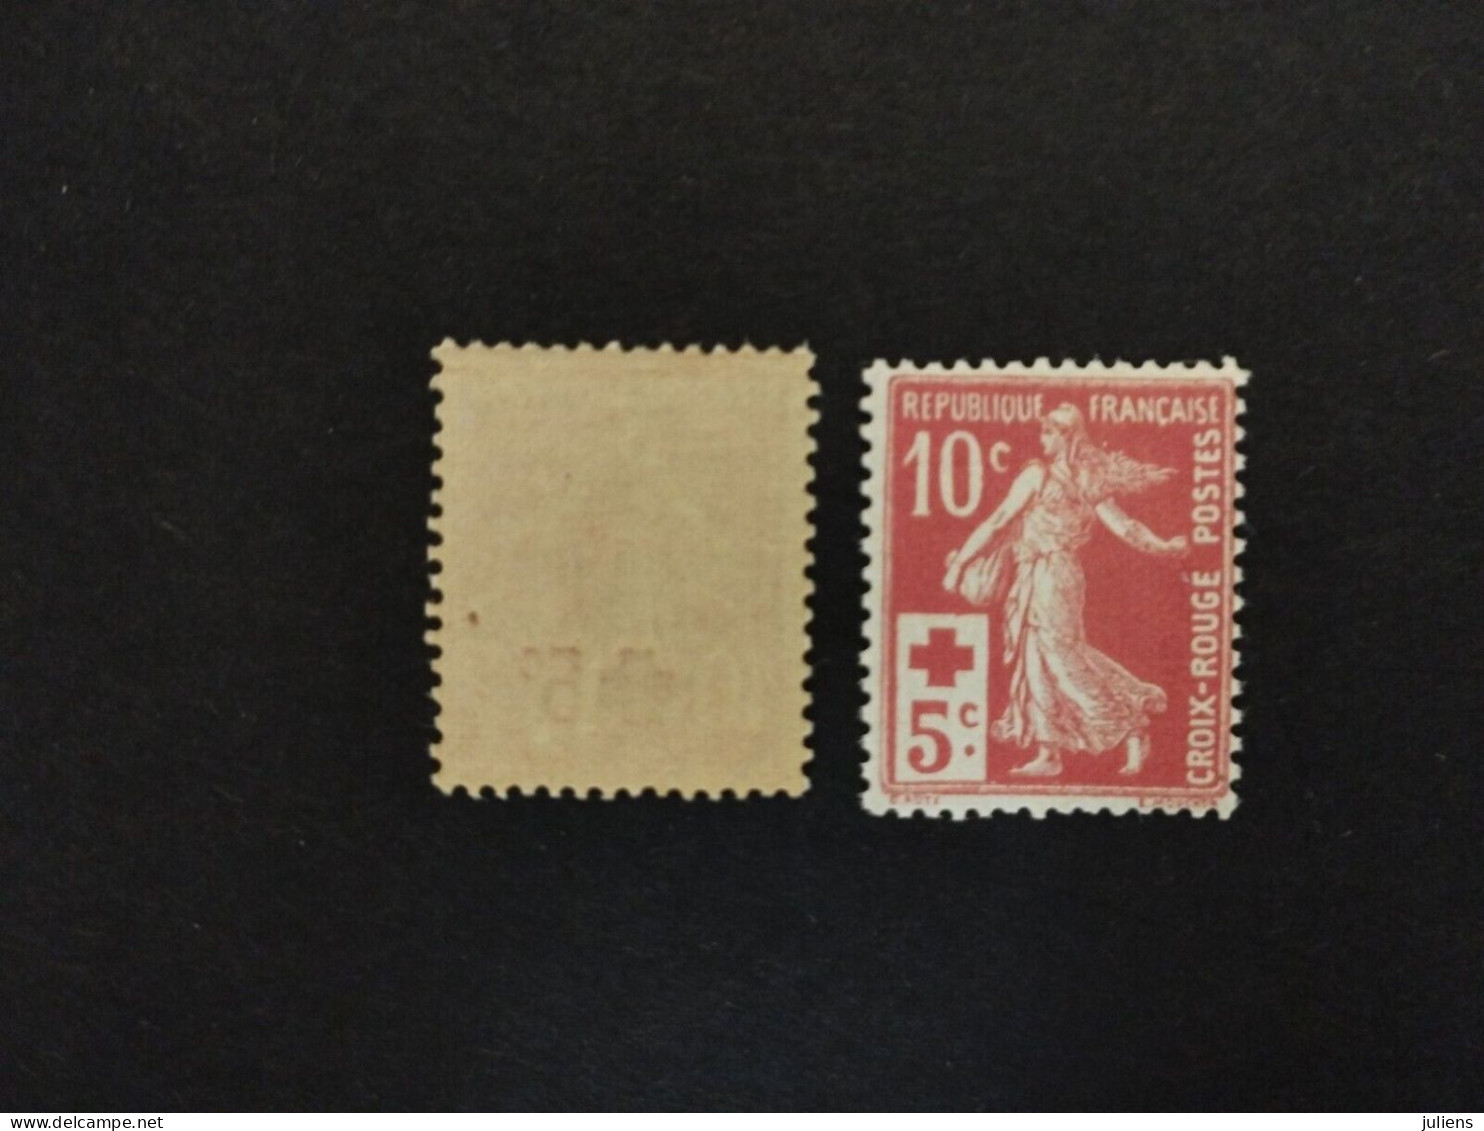 FRANCE CROIX ROUGE SEMEUSE N 146 147 DE 1914 NEUF** COTE +110€ #278 - Unused Stamps